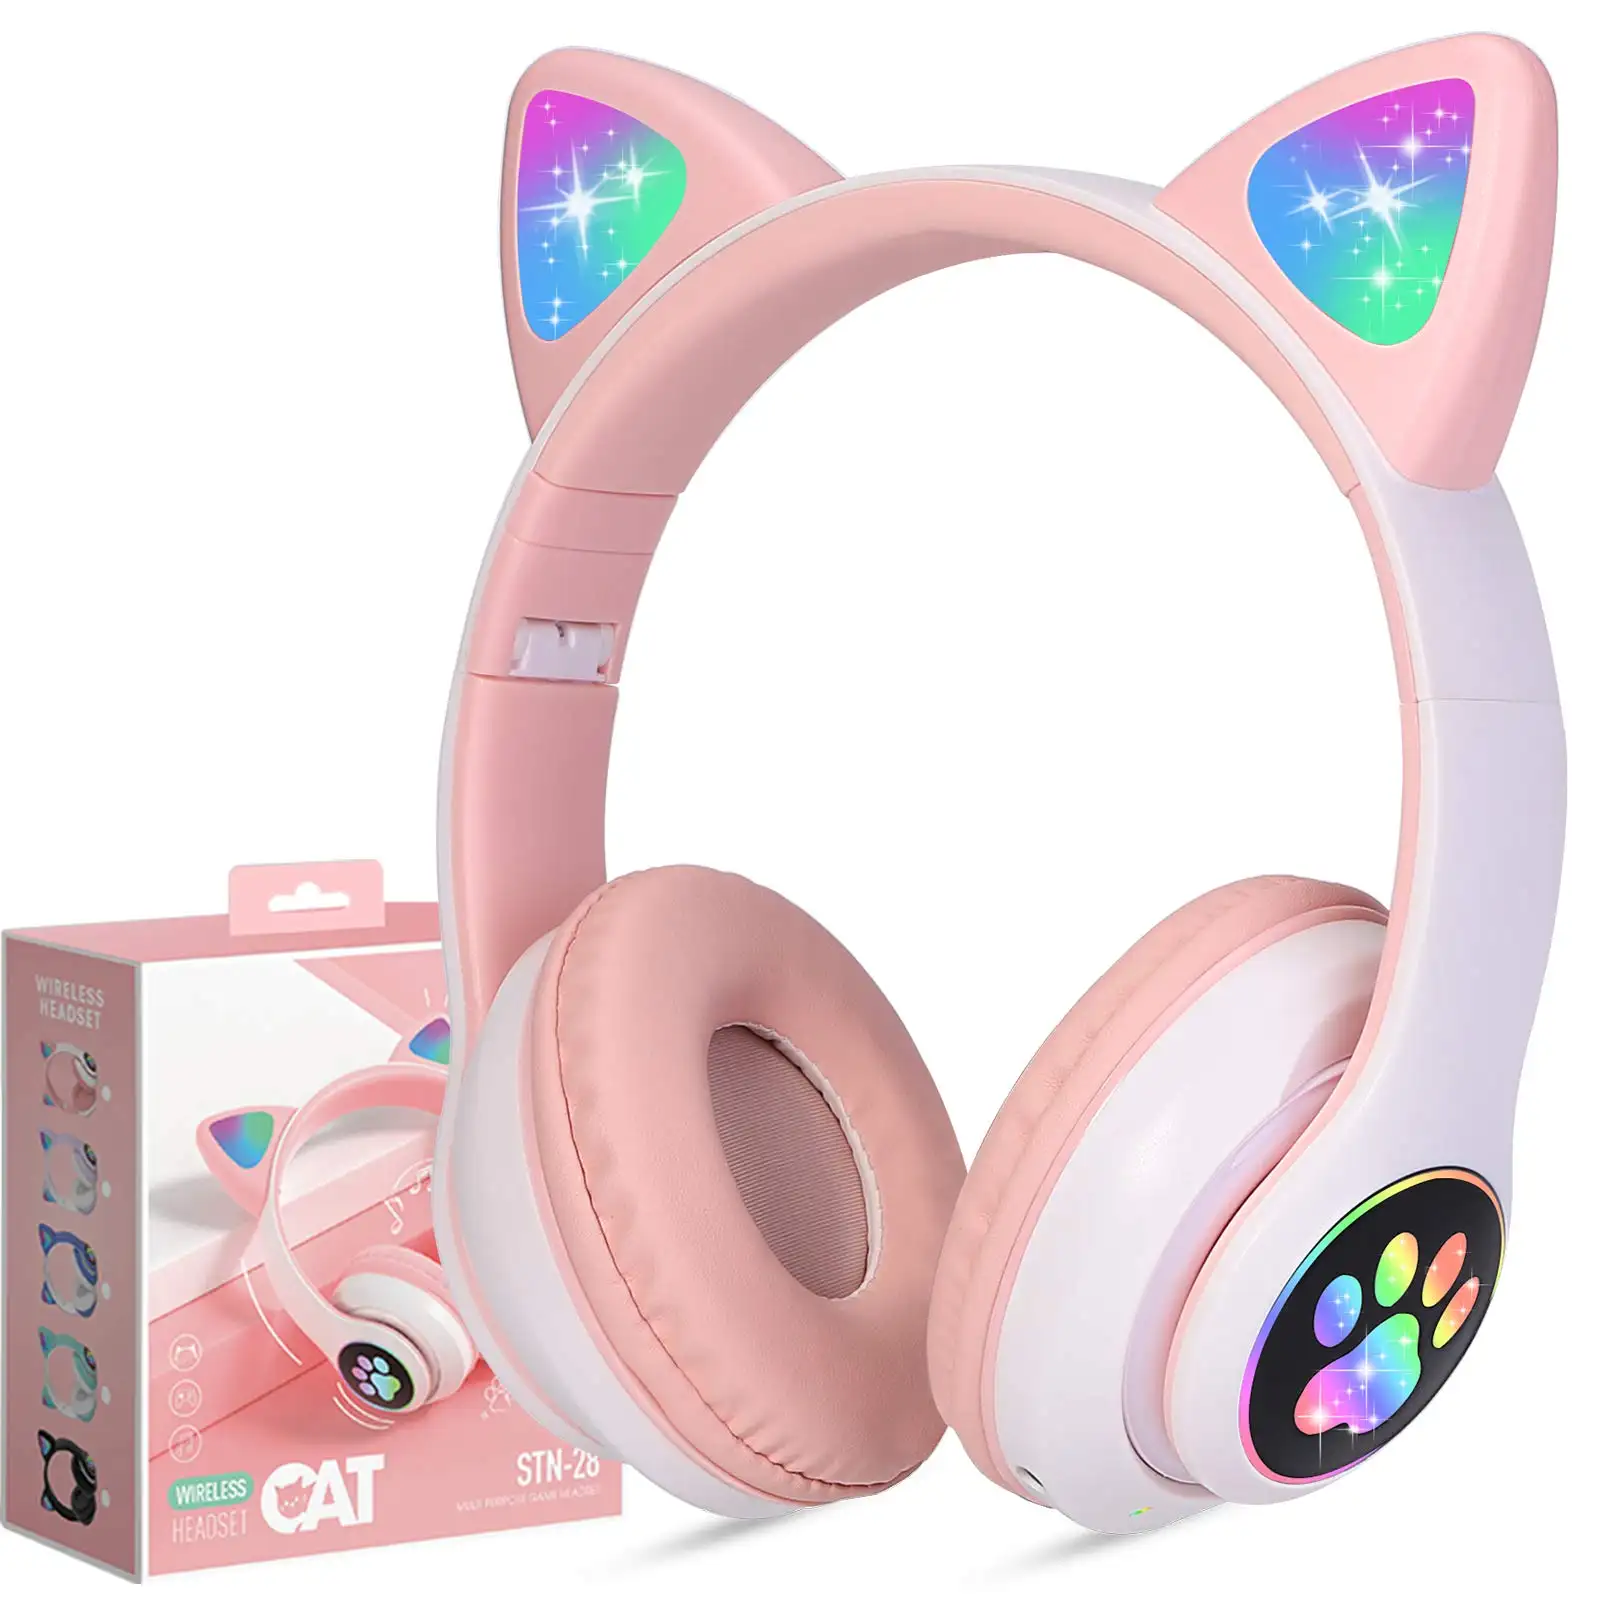 Headphone Bluetooth LED nirkabel, headphone Bluetooth lipat grosir, Headset atas telinga, headphone anak-anak perempuan